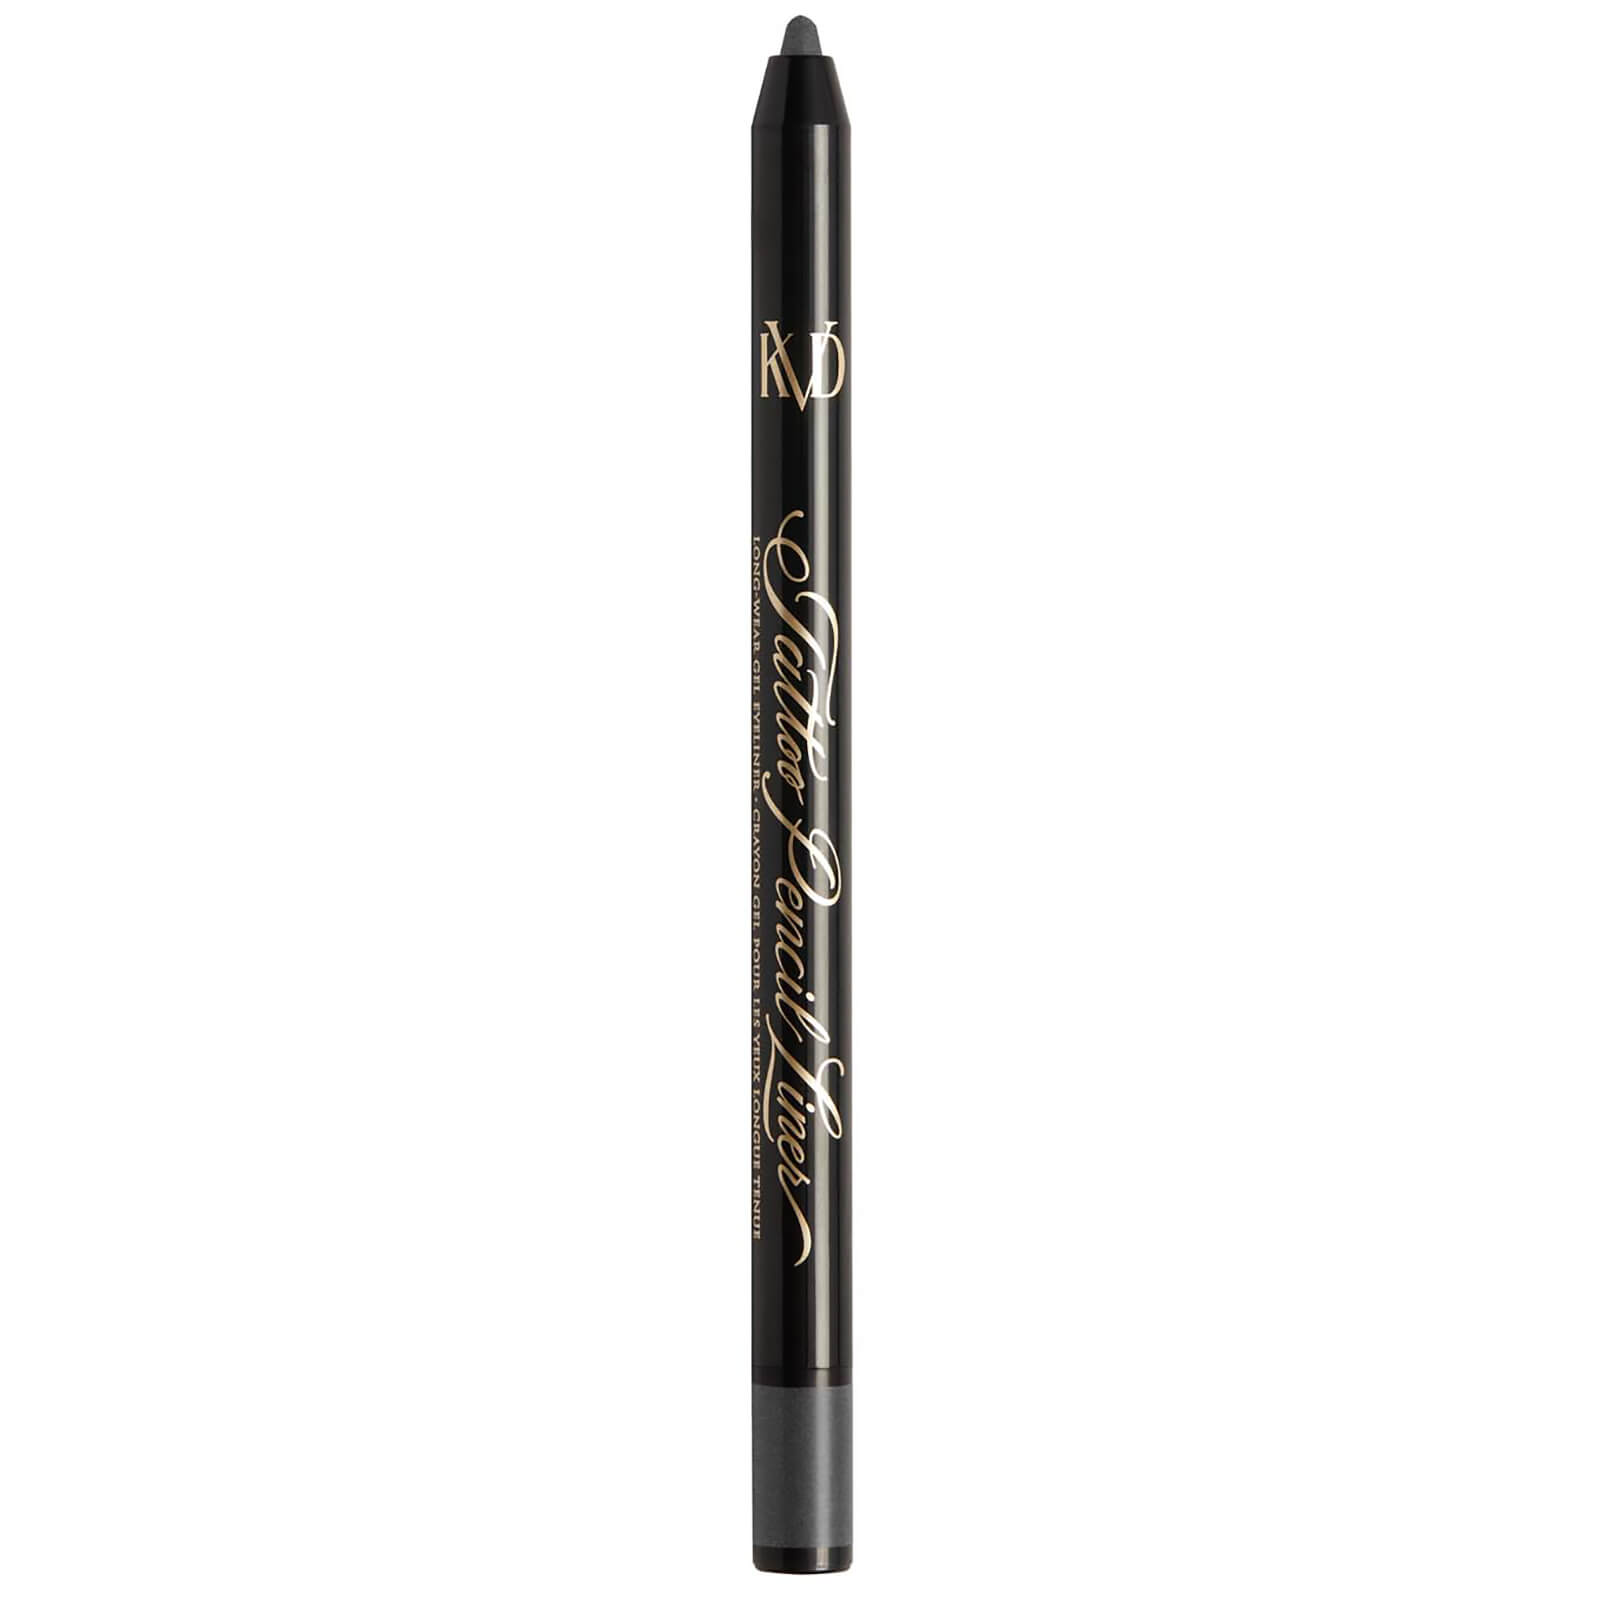 KVD Beauty Tattoo Pencil Liner Long-Wear Gel Eyeliner 0.5g (Various Shades) - Chromite Black 55